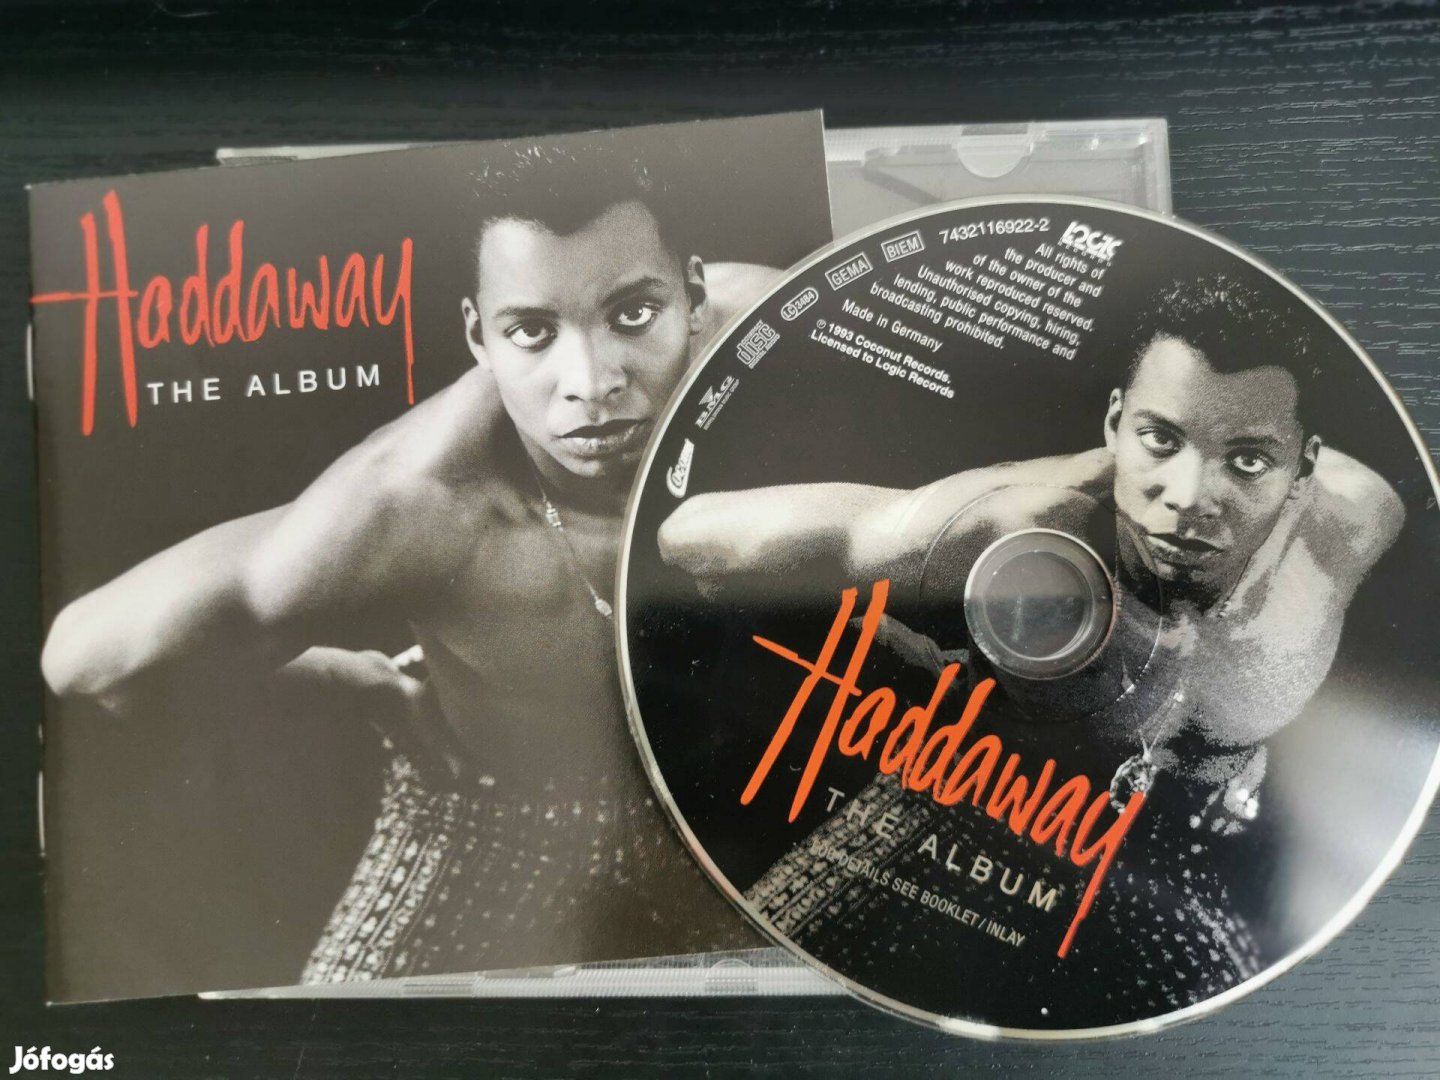 Haddaway - The Album CD